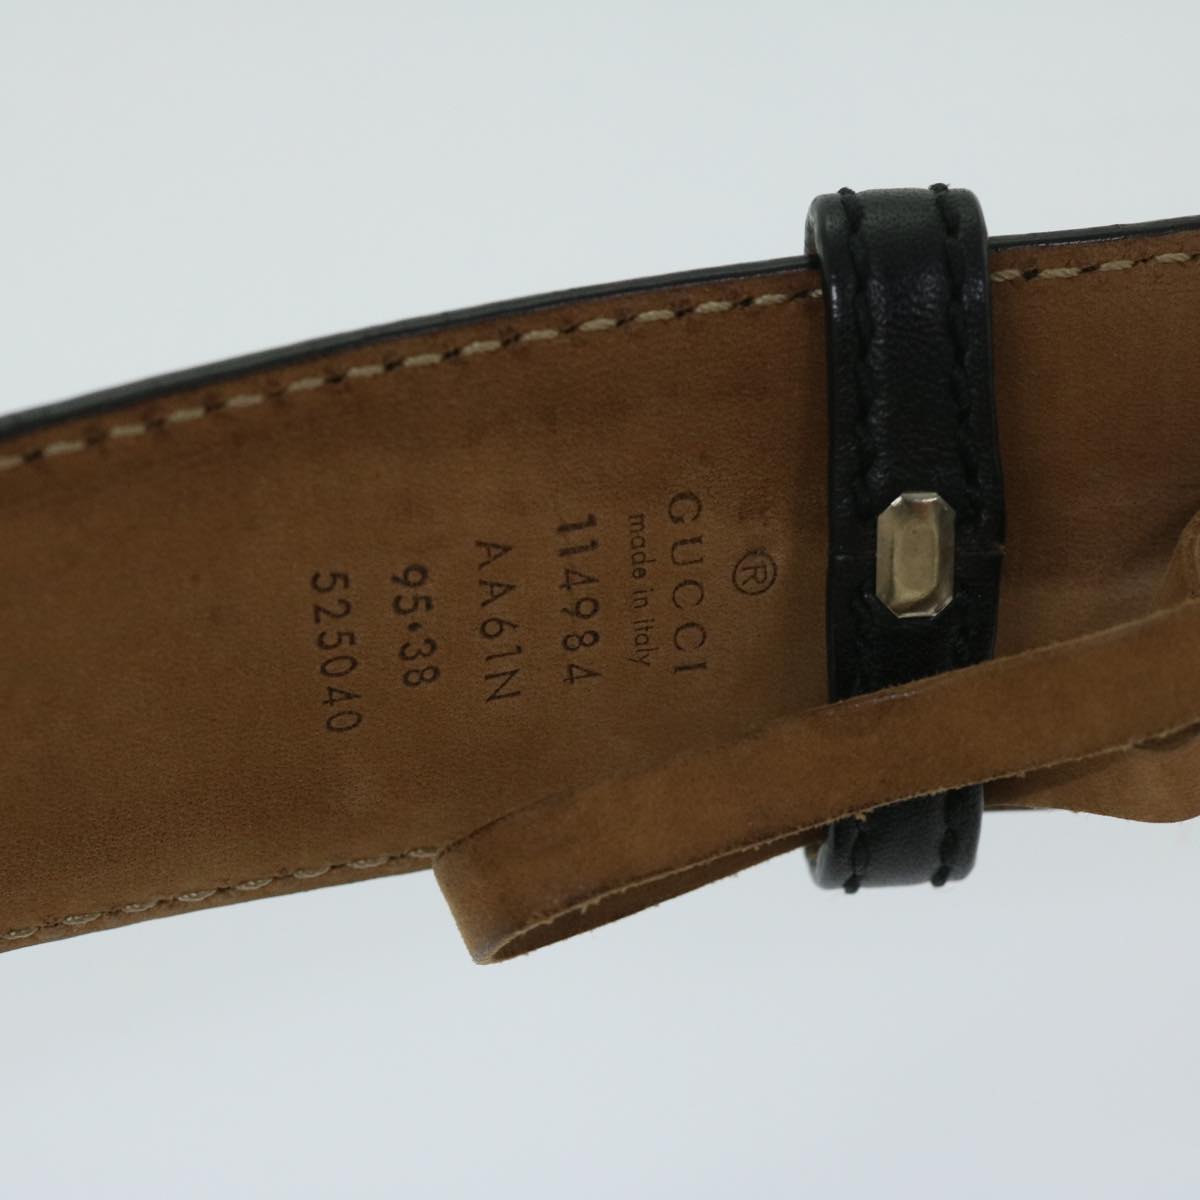 GUCCI Guccissima GG Canvas Belt Leather 41.3"" Black 114984 Auth hk1156